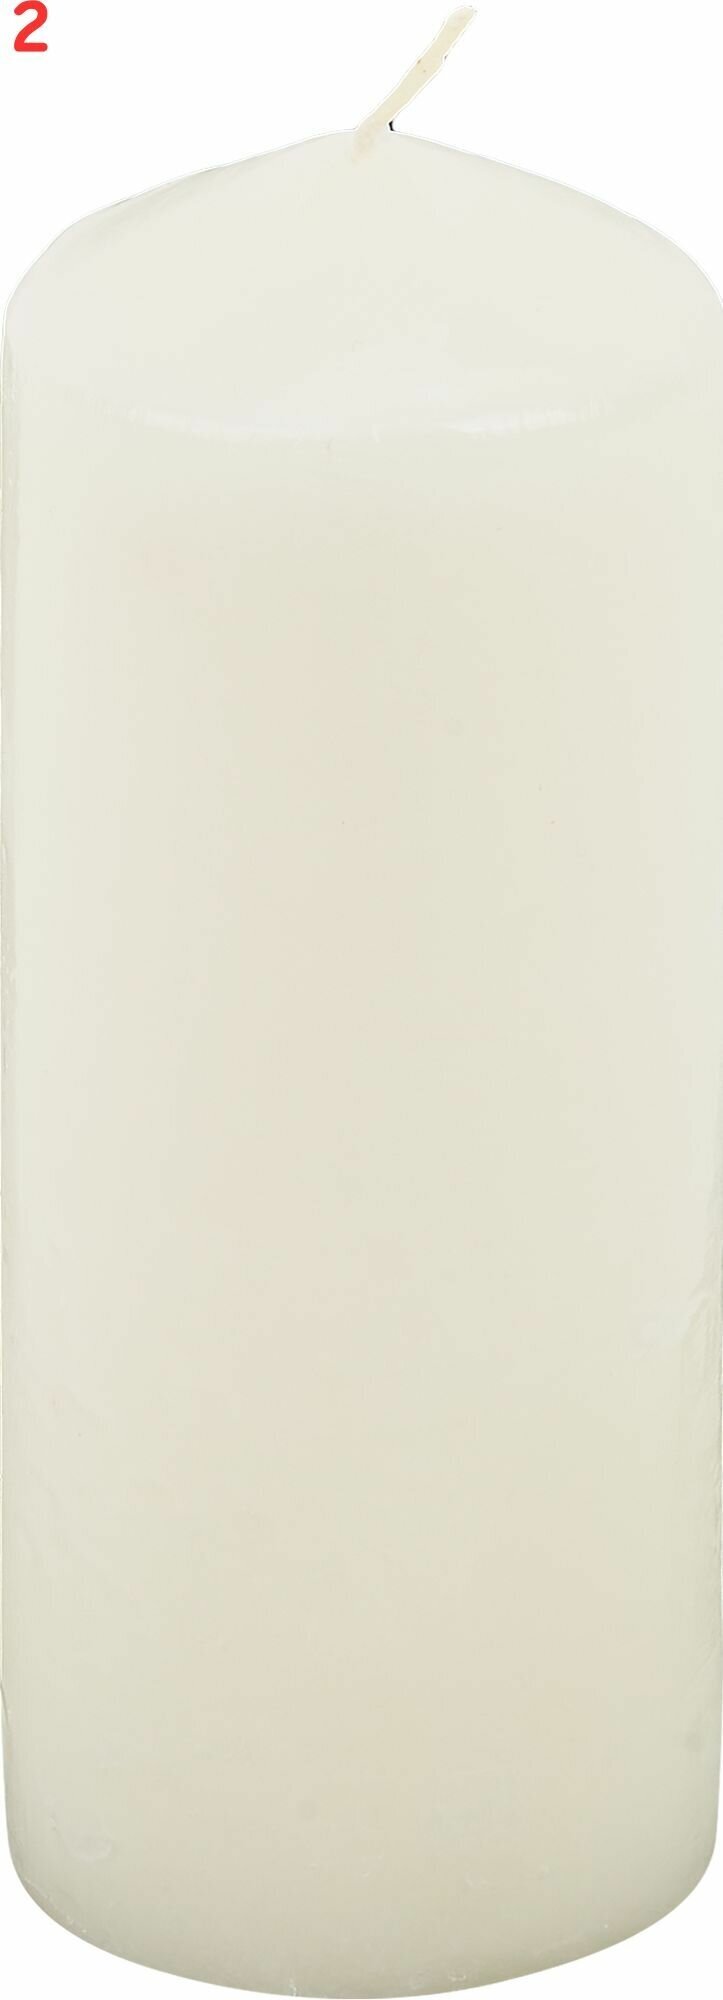 Свеча-столбик 60x170 мм, цвет белый (2 шт.)